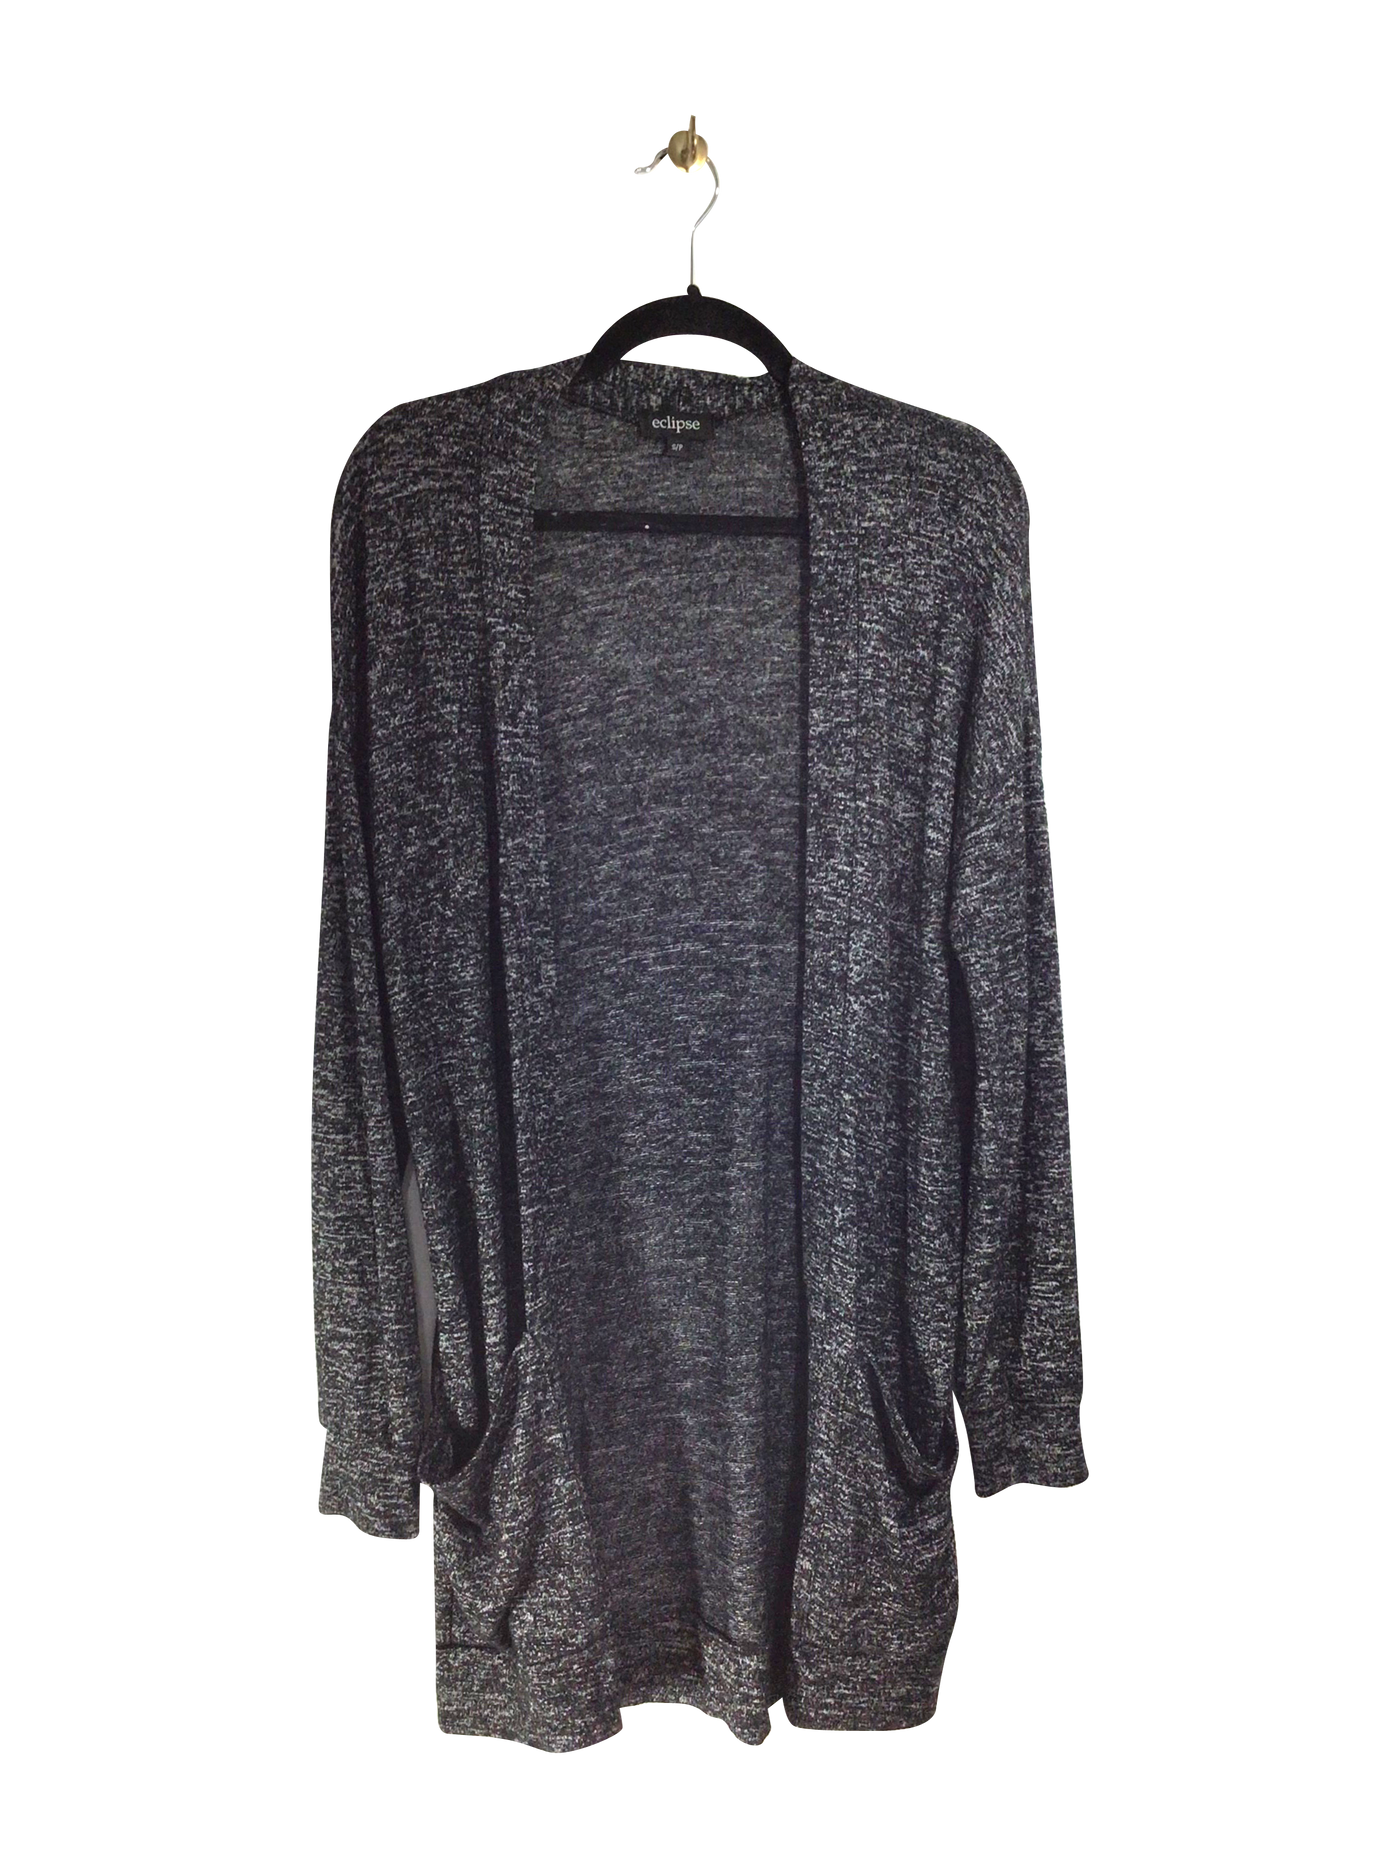 ECLIPSE Women Cardigans Regular fit in Gray - Size S | 11.28 $ KOOP